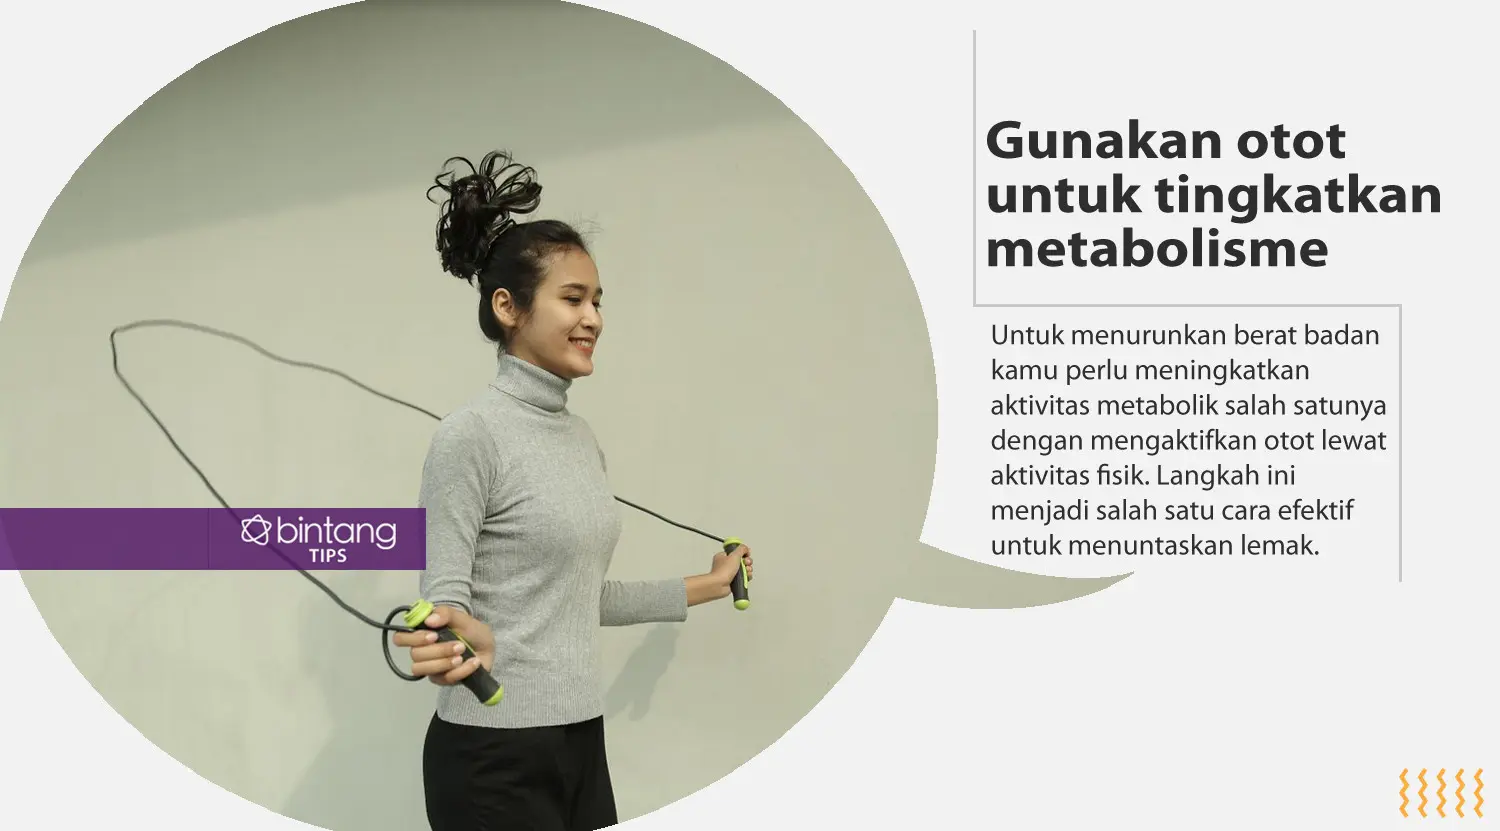 Cara cepat turunkan berat badan. (Foto: Daniel Kampua, Digital Imaging: Nurman Abdul Hakim/Bintang.com)